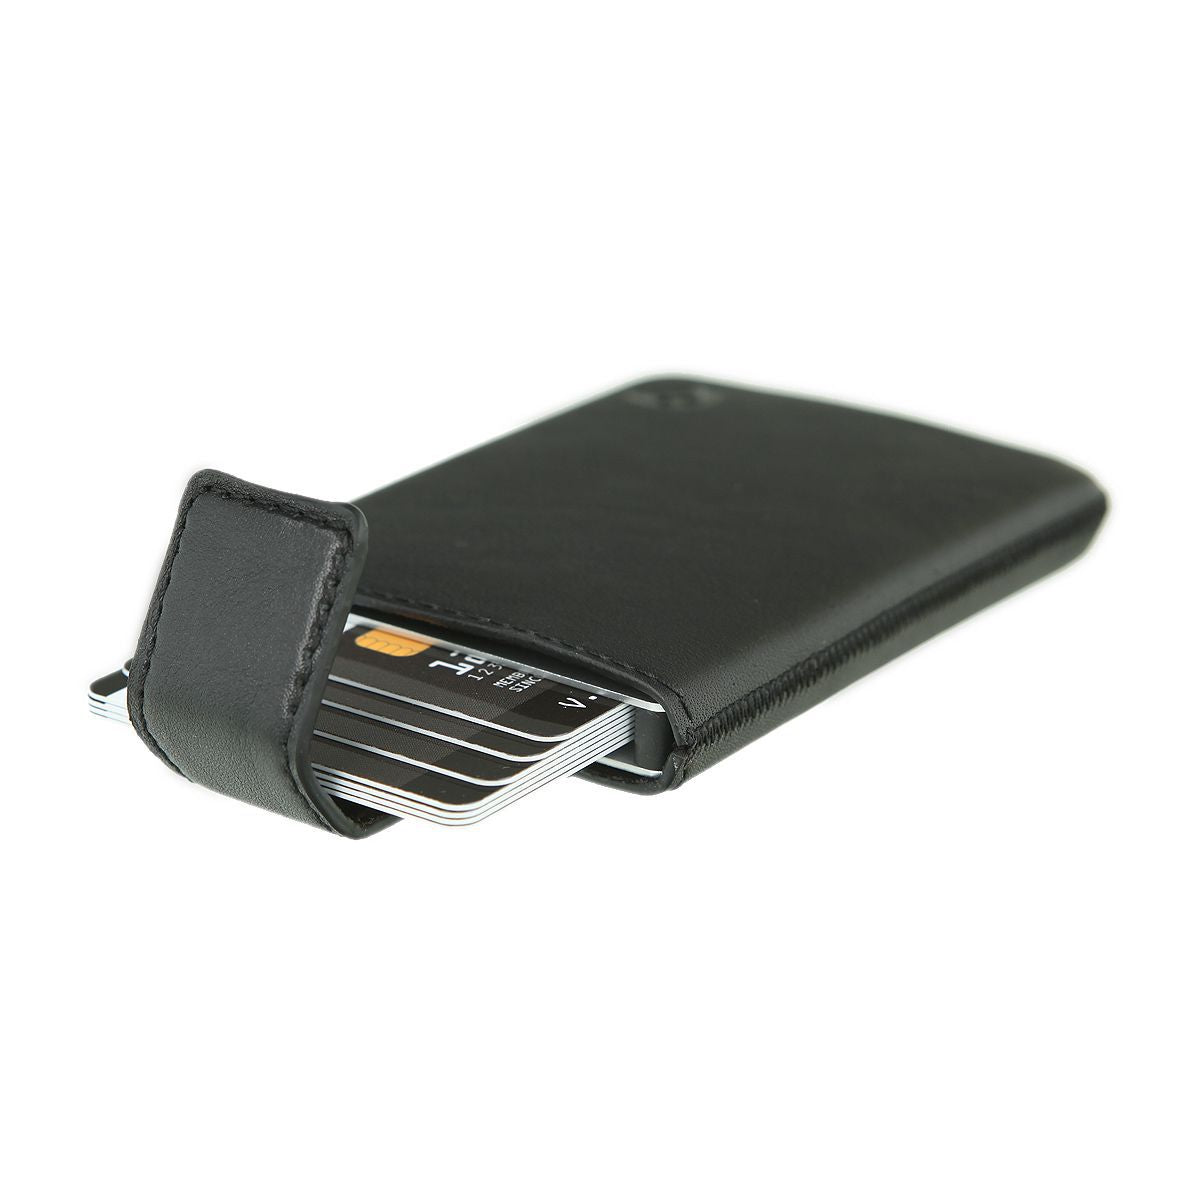 Card Case Pocket Luxe Black